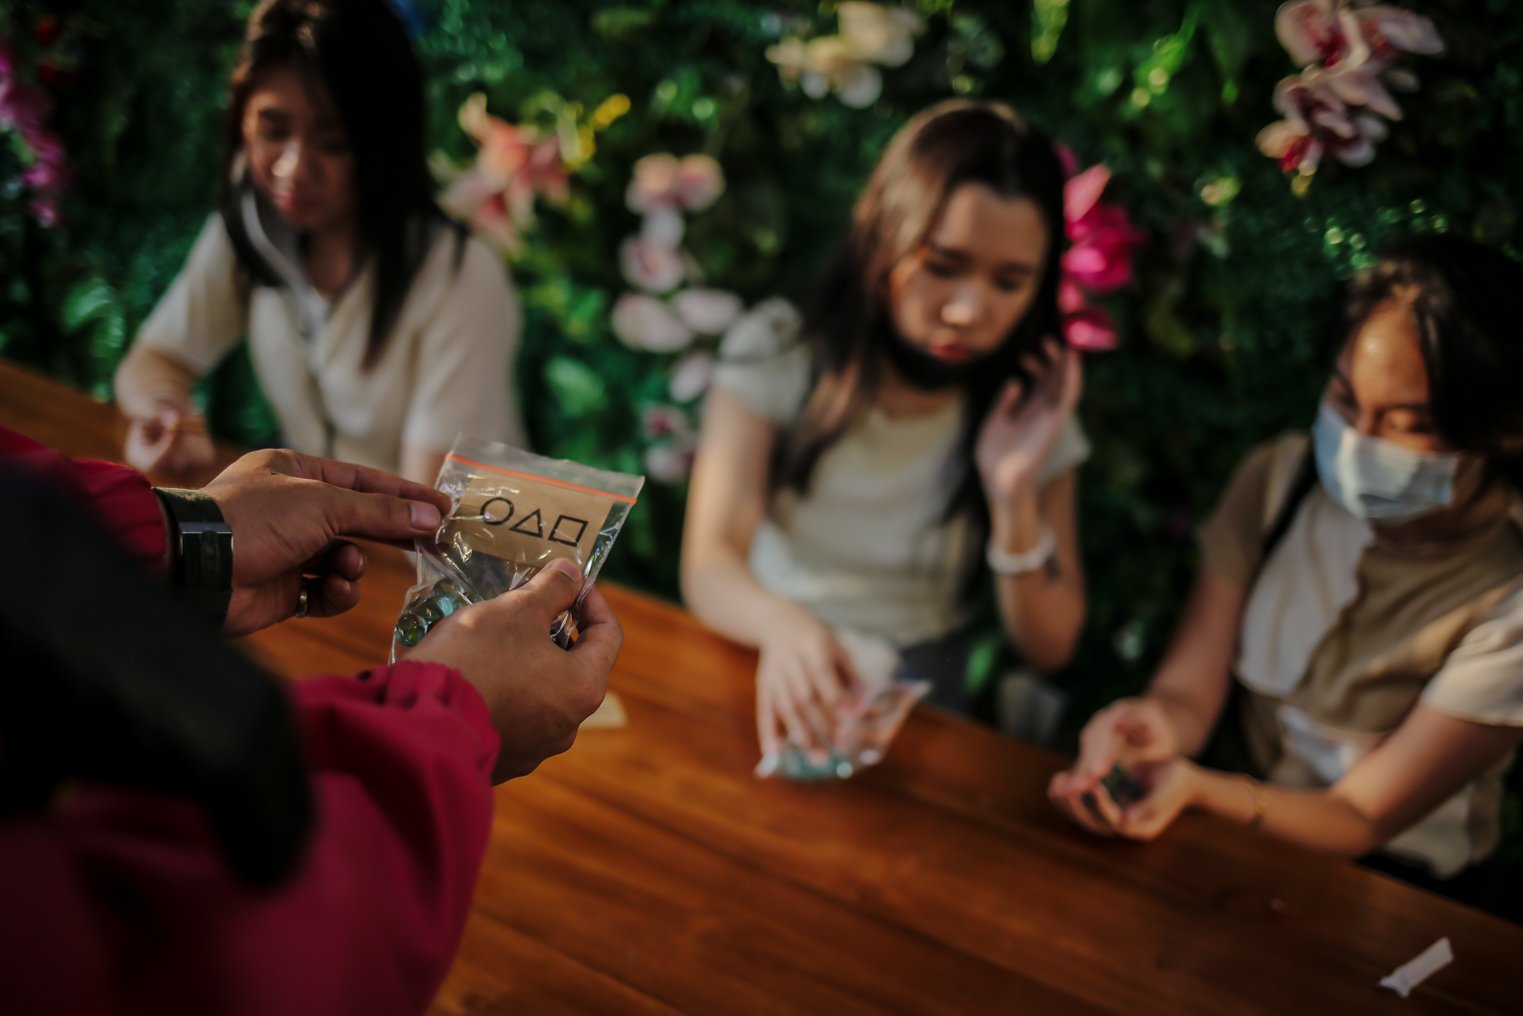 Pelayan menggunakan kostum bertema Squid Game melayani pengunjung yang datang di Strawberry Cafe, Jakarta, Jumat, (15/10/2021). Hal tersebut berhasil menarik antusias pengunjung berdatangan, pihak restoran mengaku alami kenaikan omzet hingga dua kali lipat sejak adakan permainan yang terinspirasi dari serial drama berdarah asal Korea Selatan tersebut.